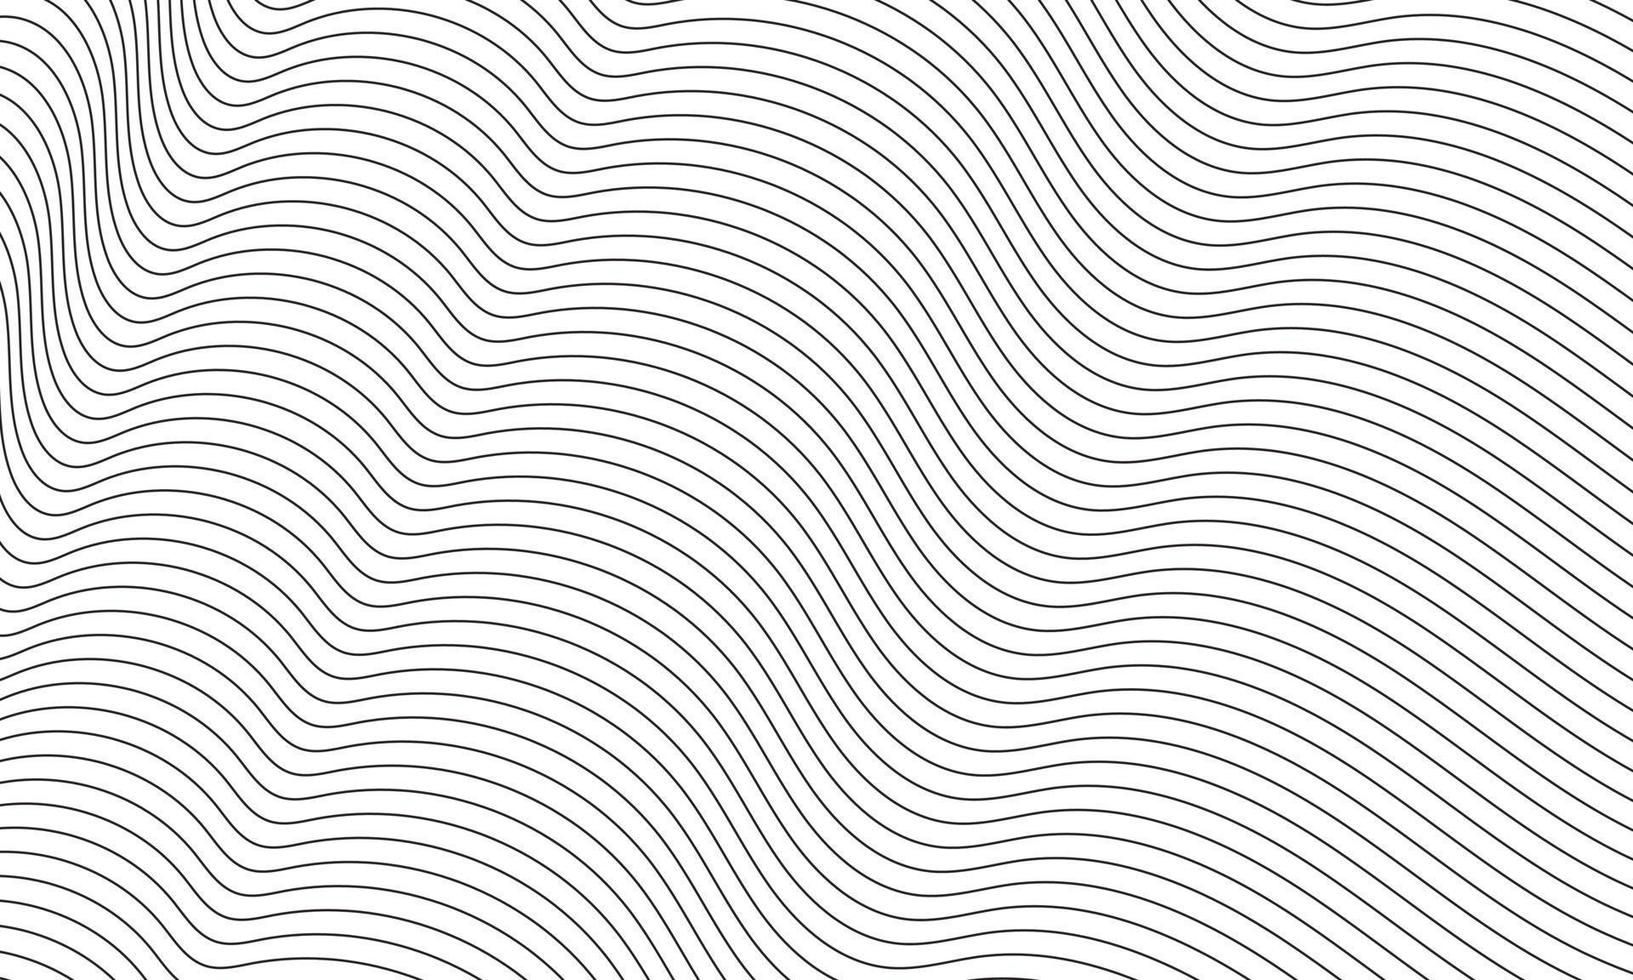 vector illustration black pattern lines abstract